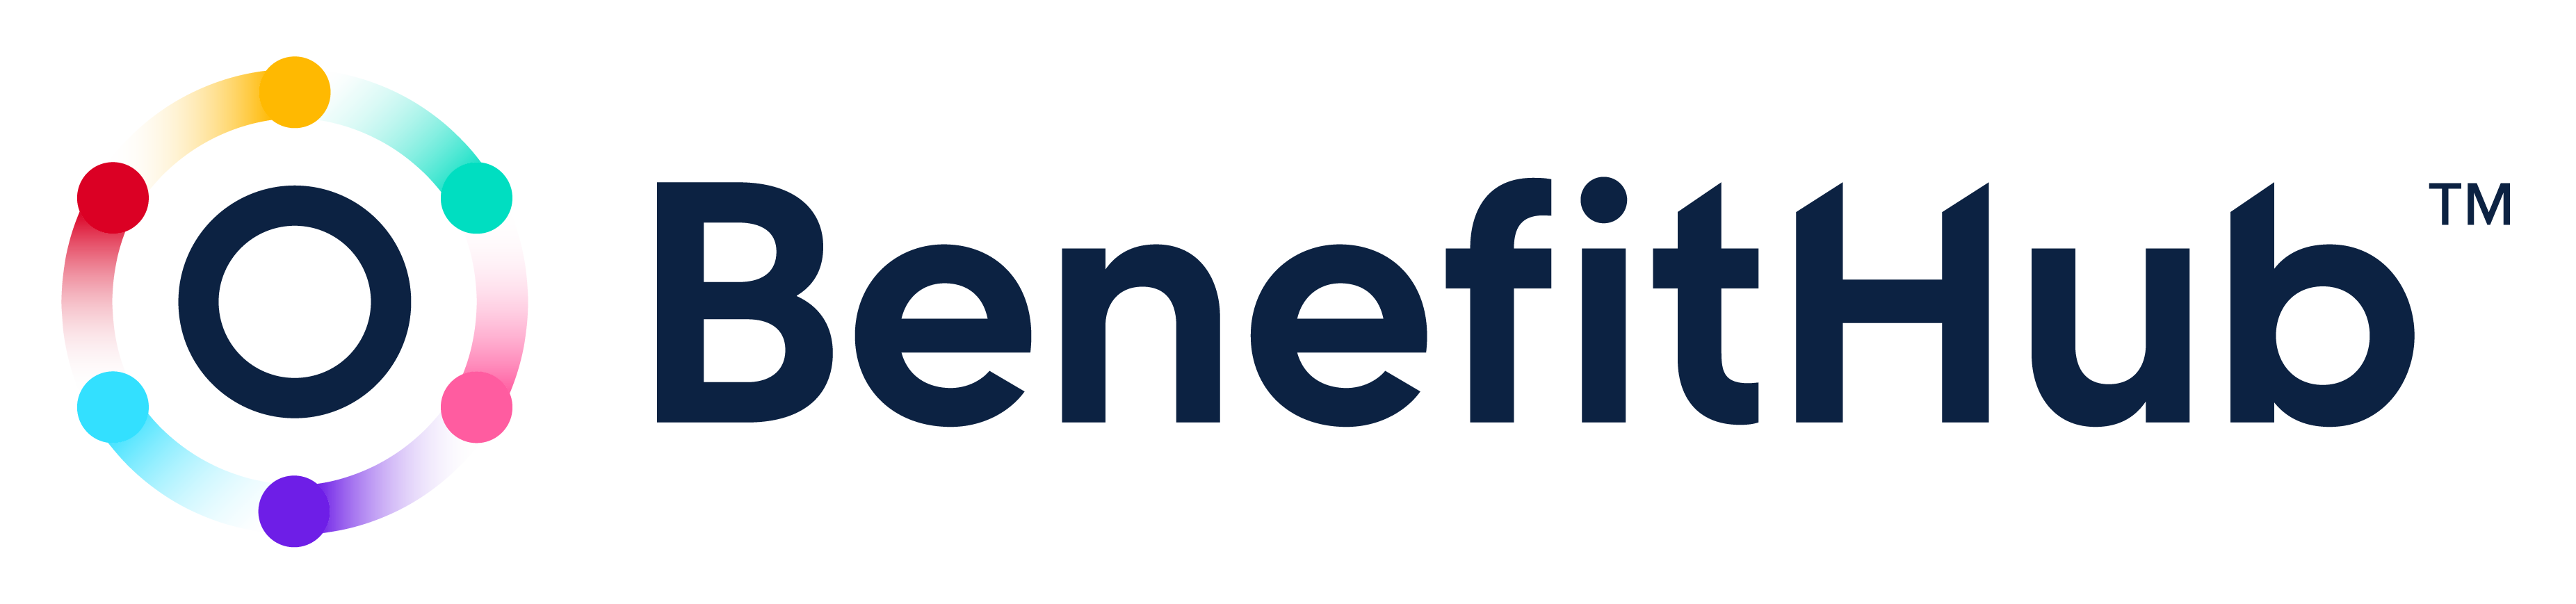 BenefitHub Logo Variations_Standard Logo